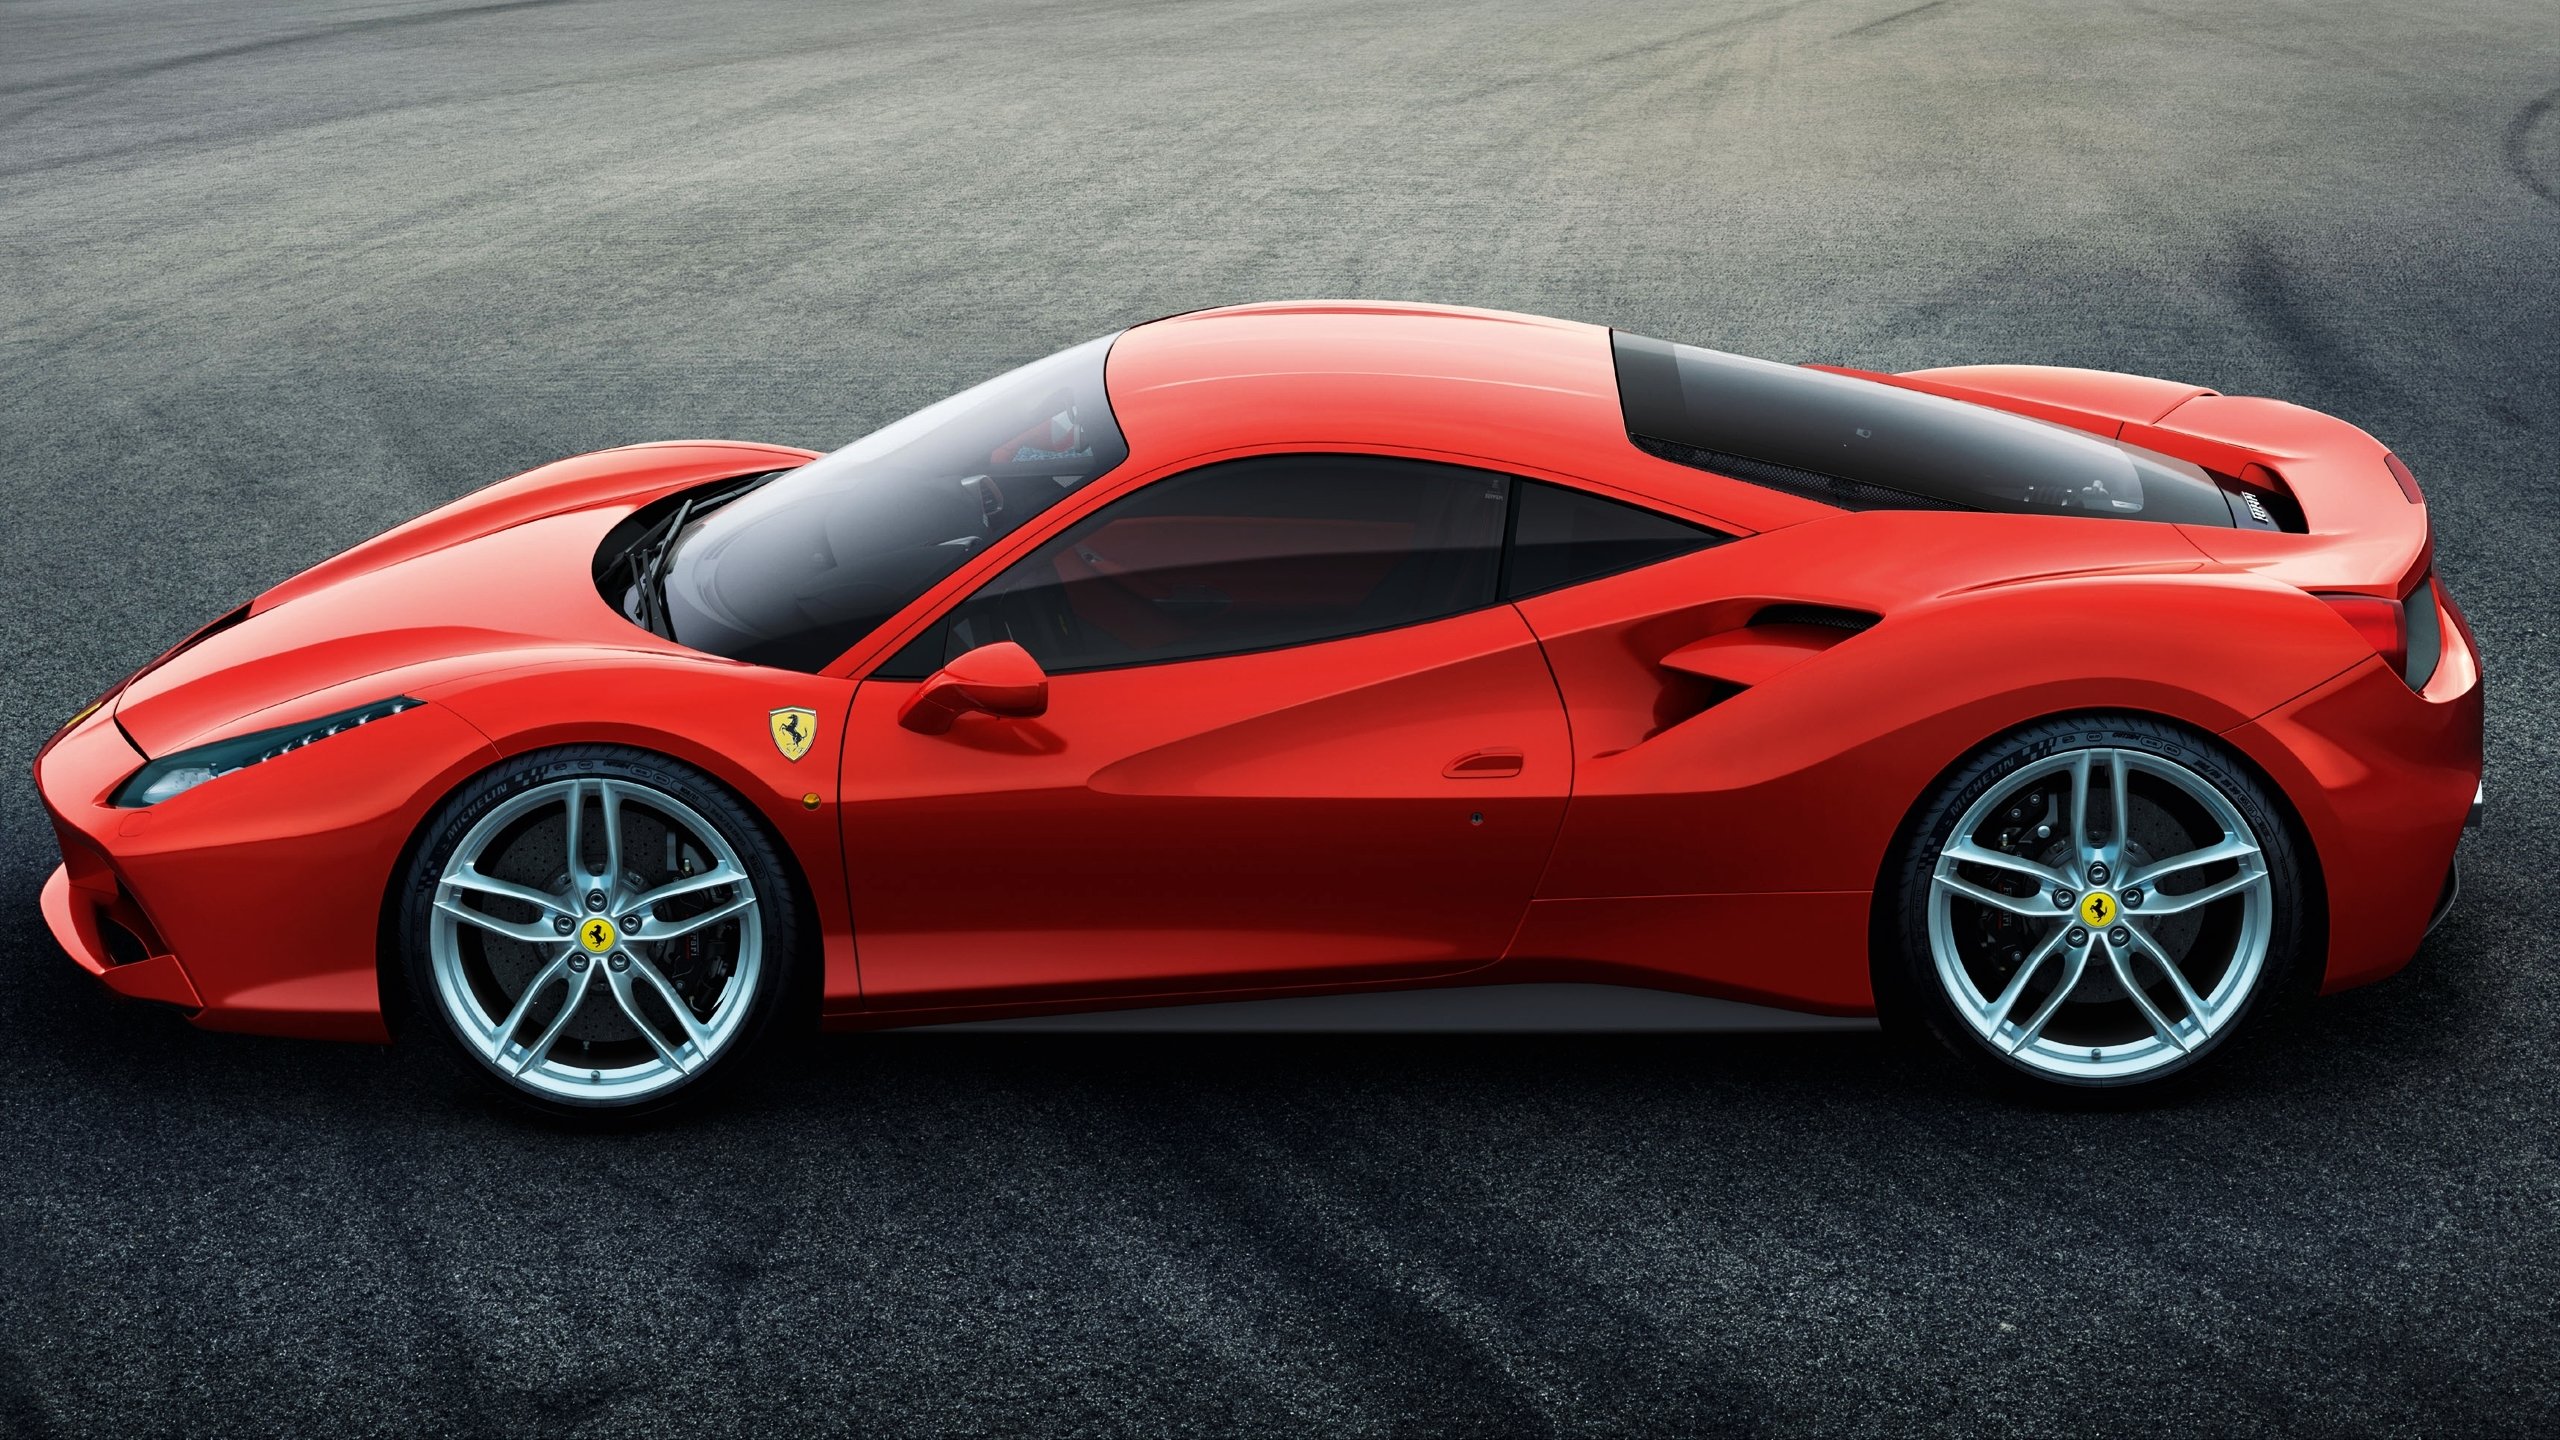 High resolution Ferrari 488 hd 2560x1440 background ID:339280 for PC